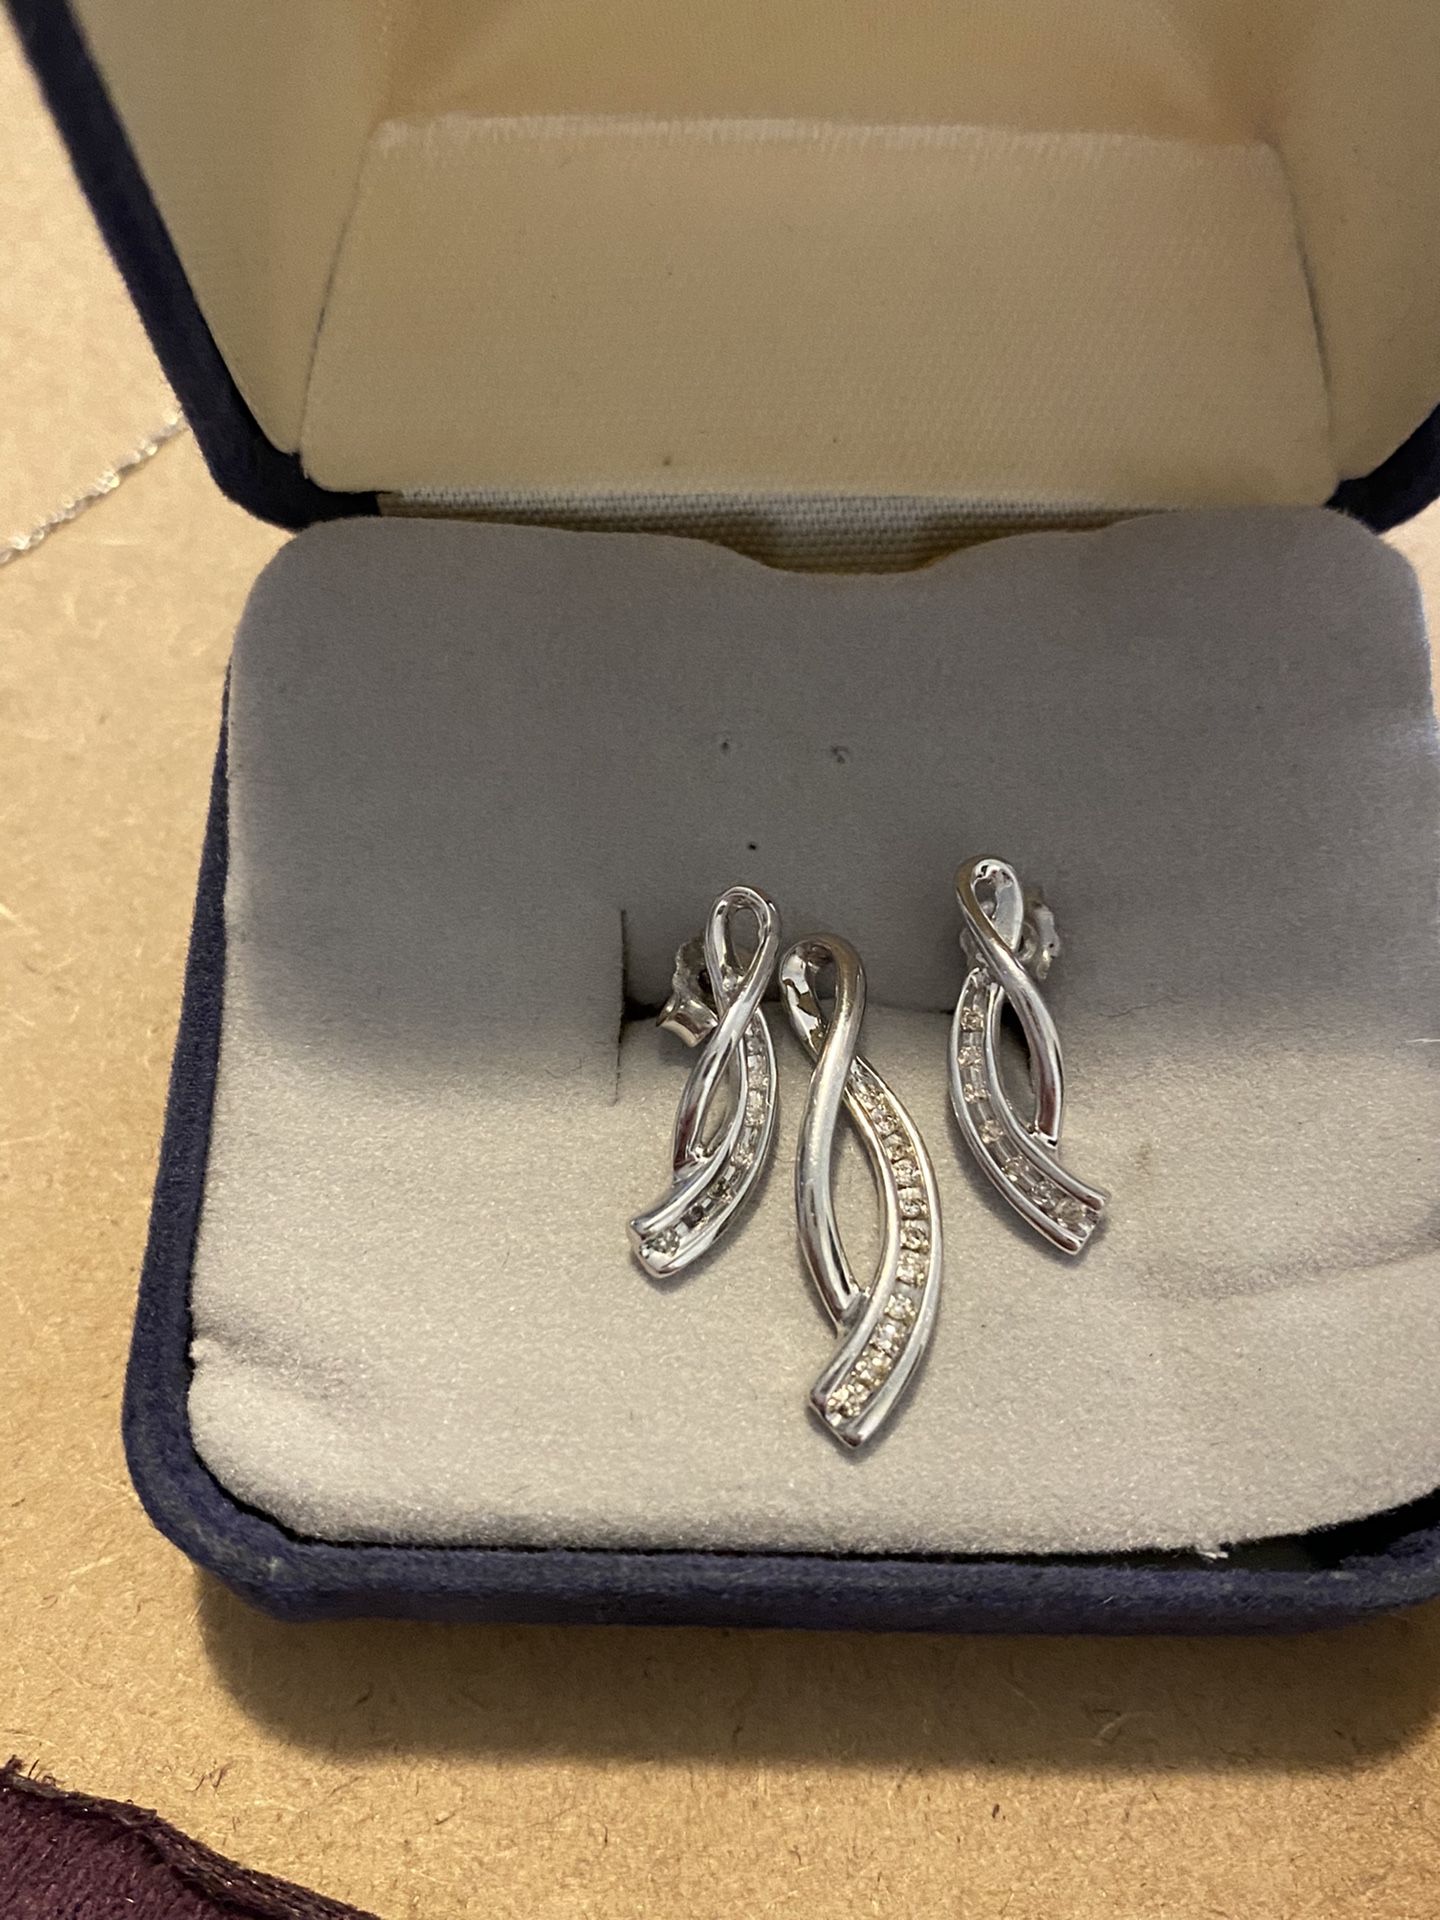 10k white gold diamonds earrings and pendant